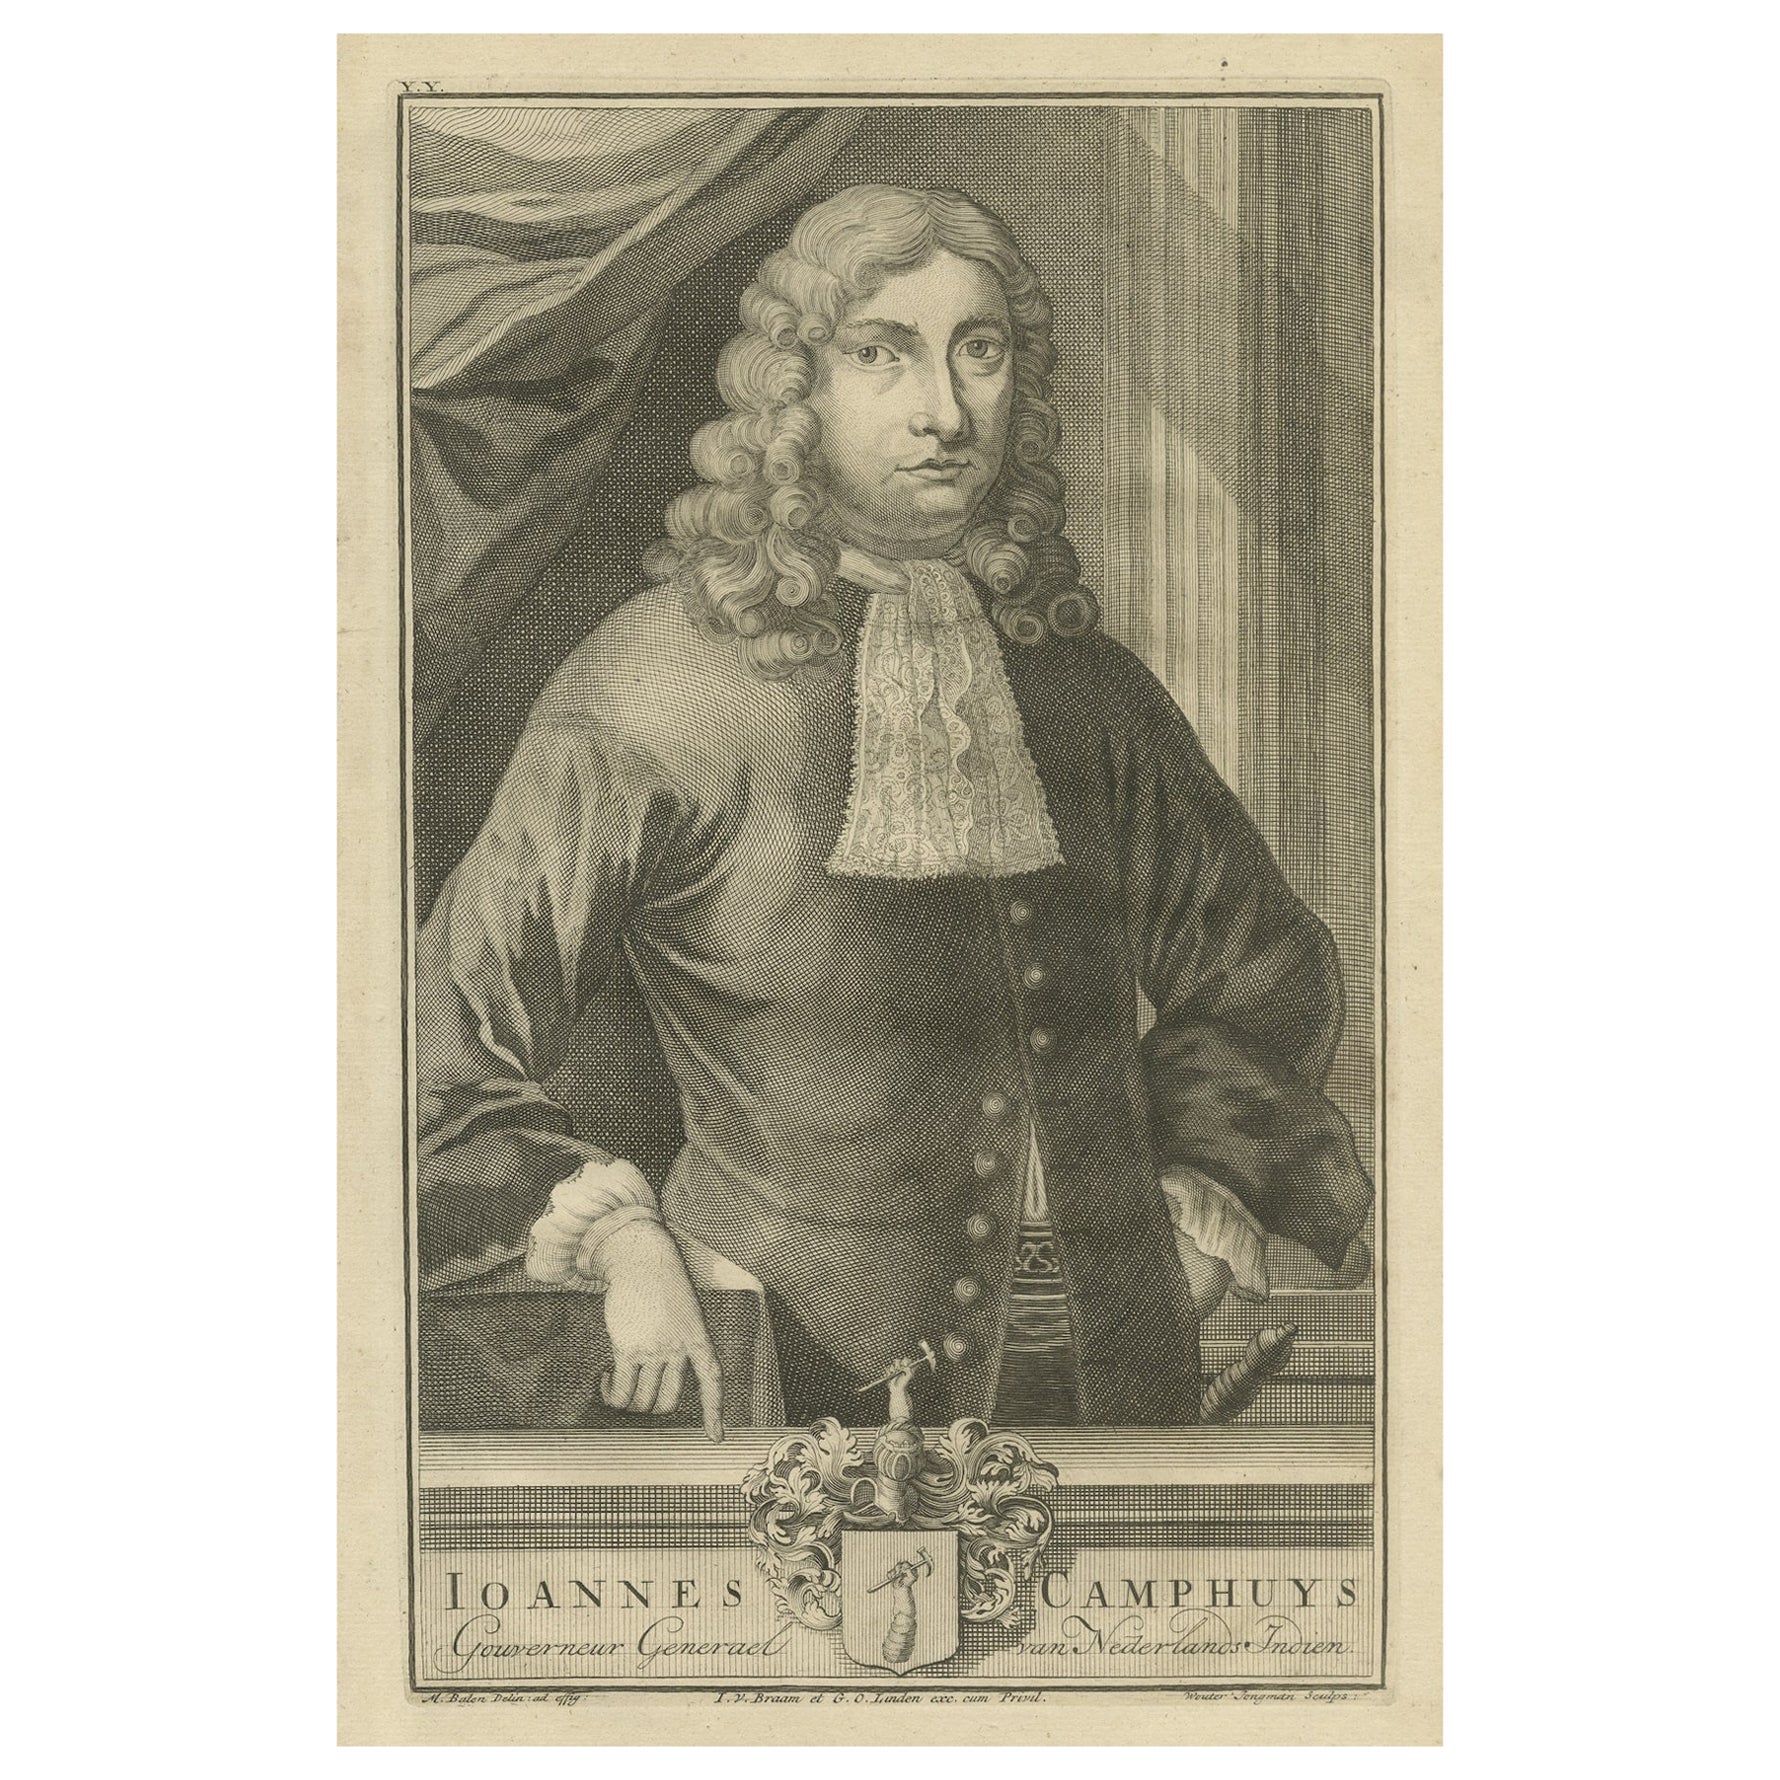 Ioannes Camphuys: Venerable Governor-General of the VOC, Niederländisch-Ostindien, 1724